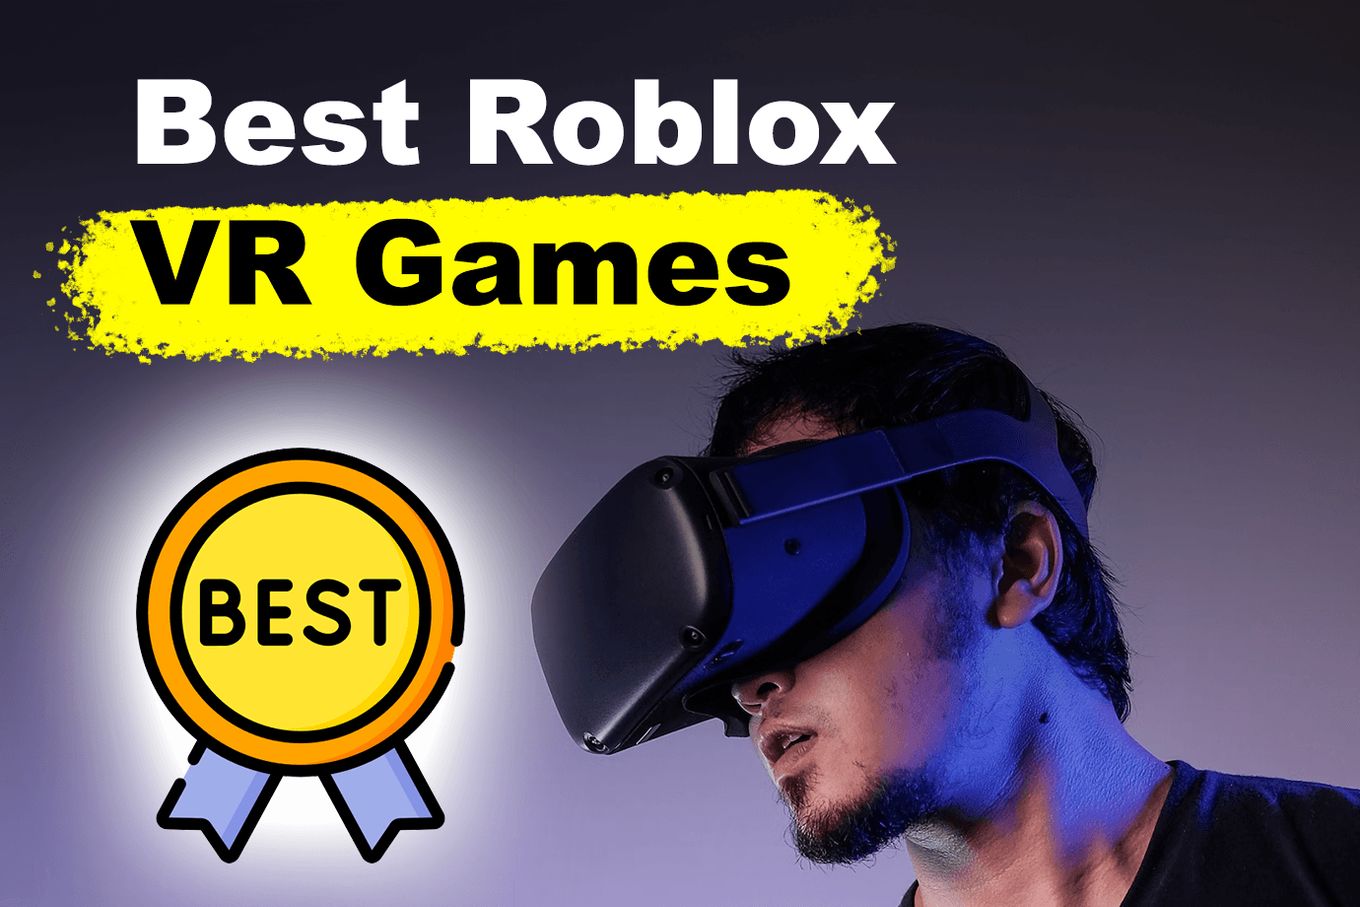 Best Roblox VR Games